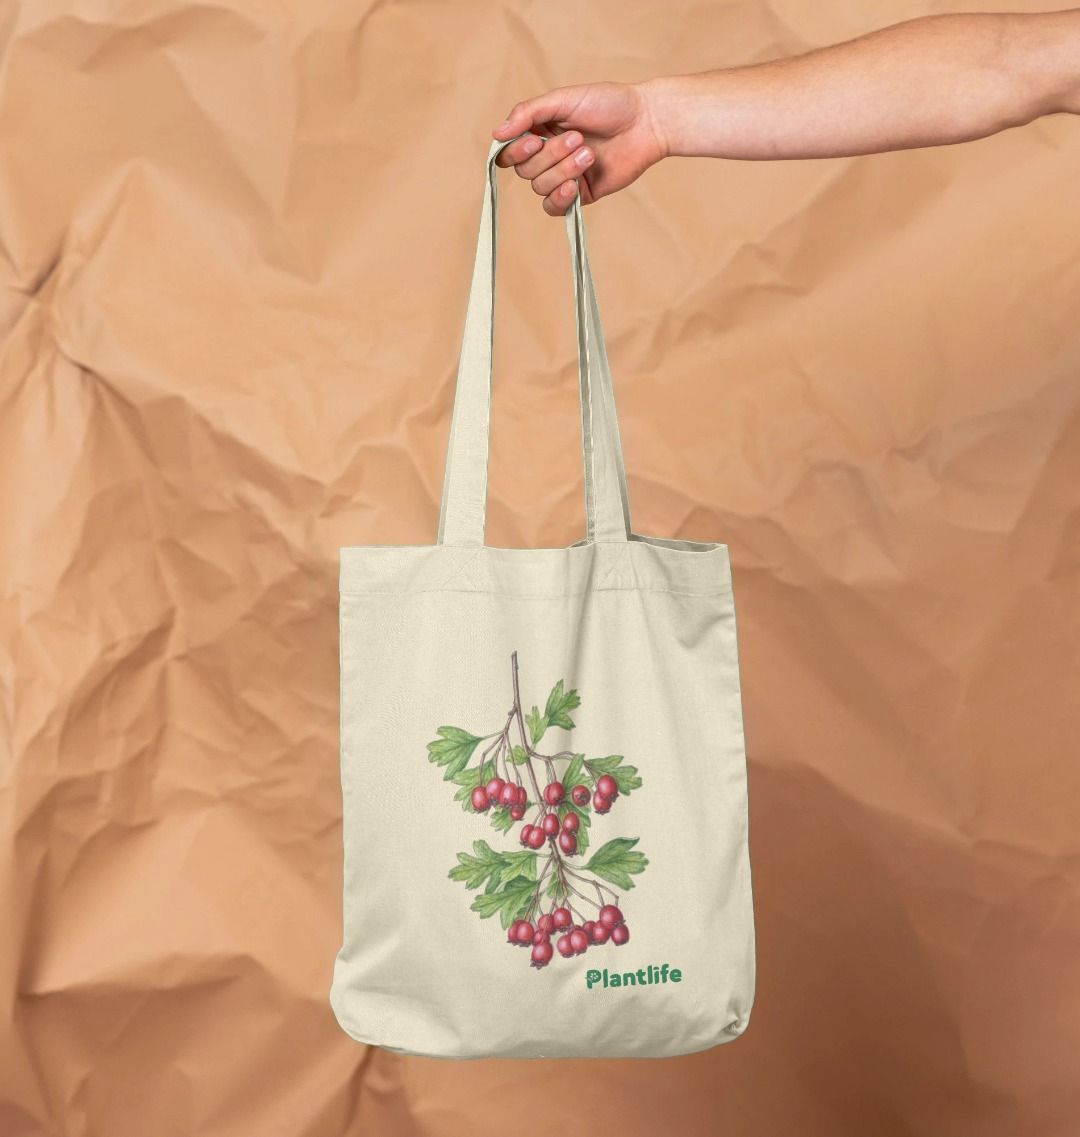 Plantlife Design Tote Bag - Crataegus monogyna (Common Hawthorn)